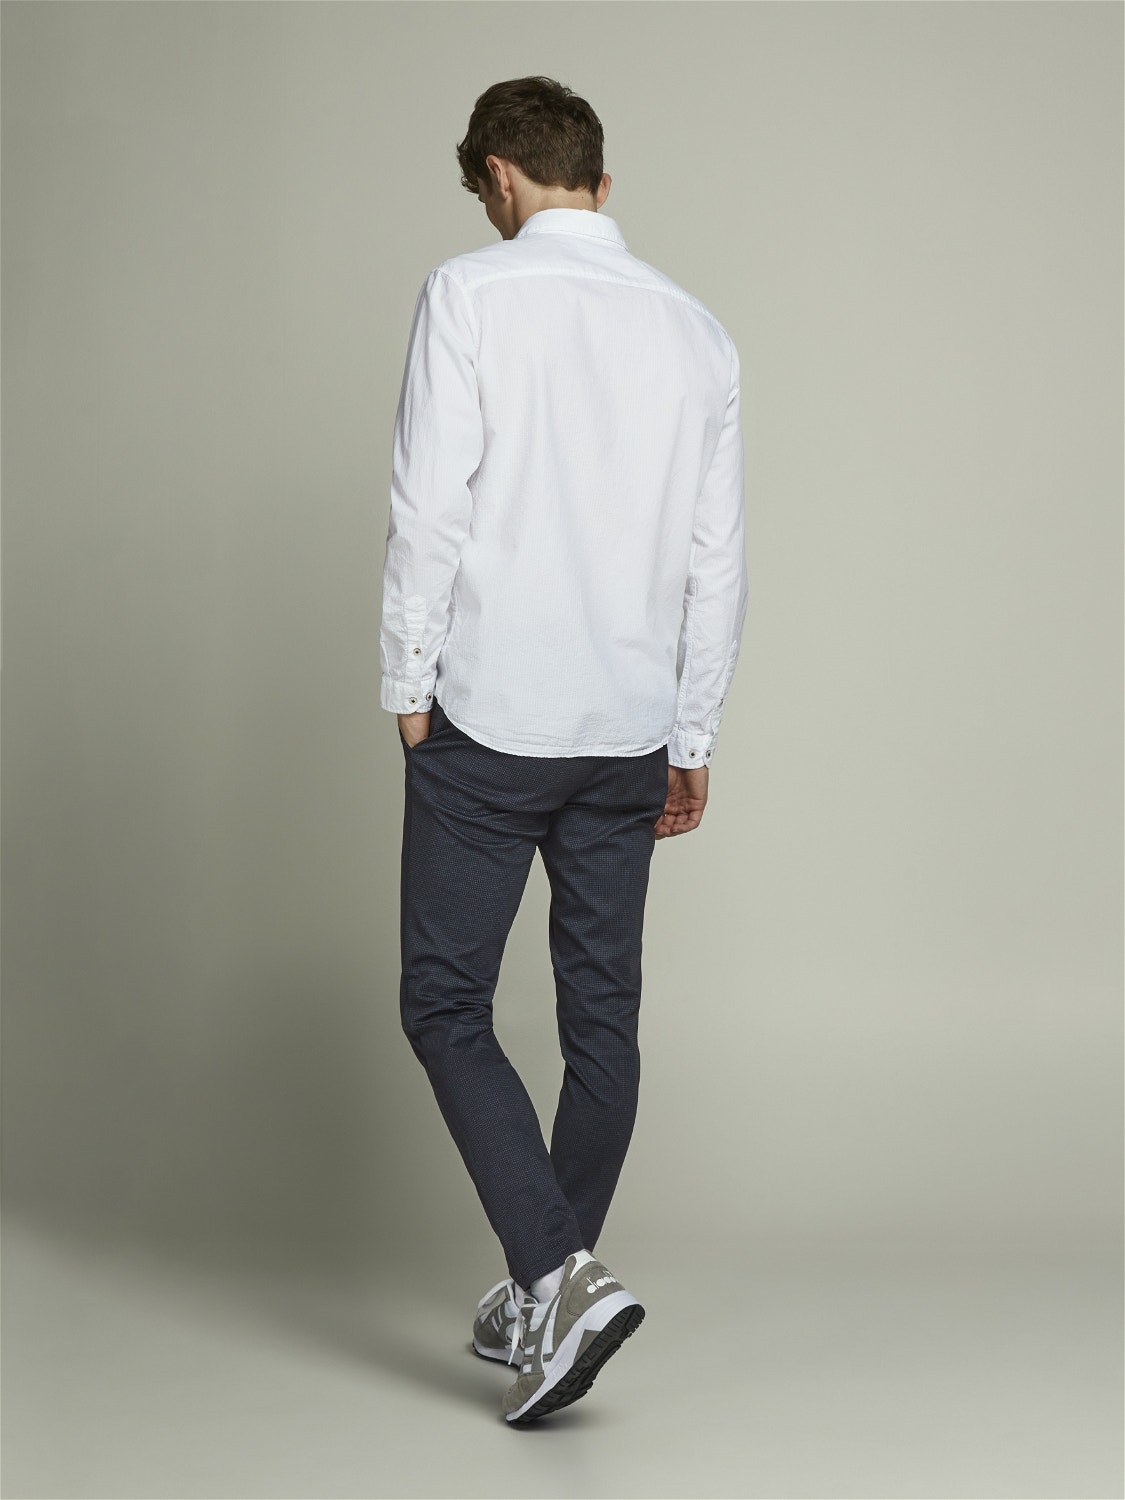 Jack & Jones Slim Fit Spodnie chino -Navy Blazer - 12175009